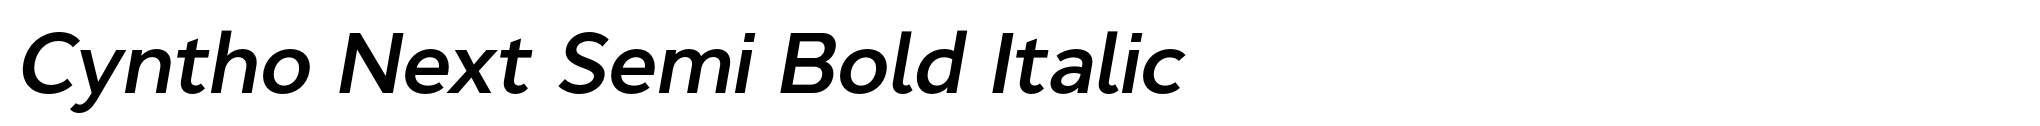 Cyntho Next Semi Bold Italic image